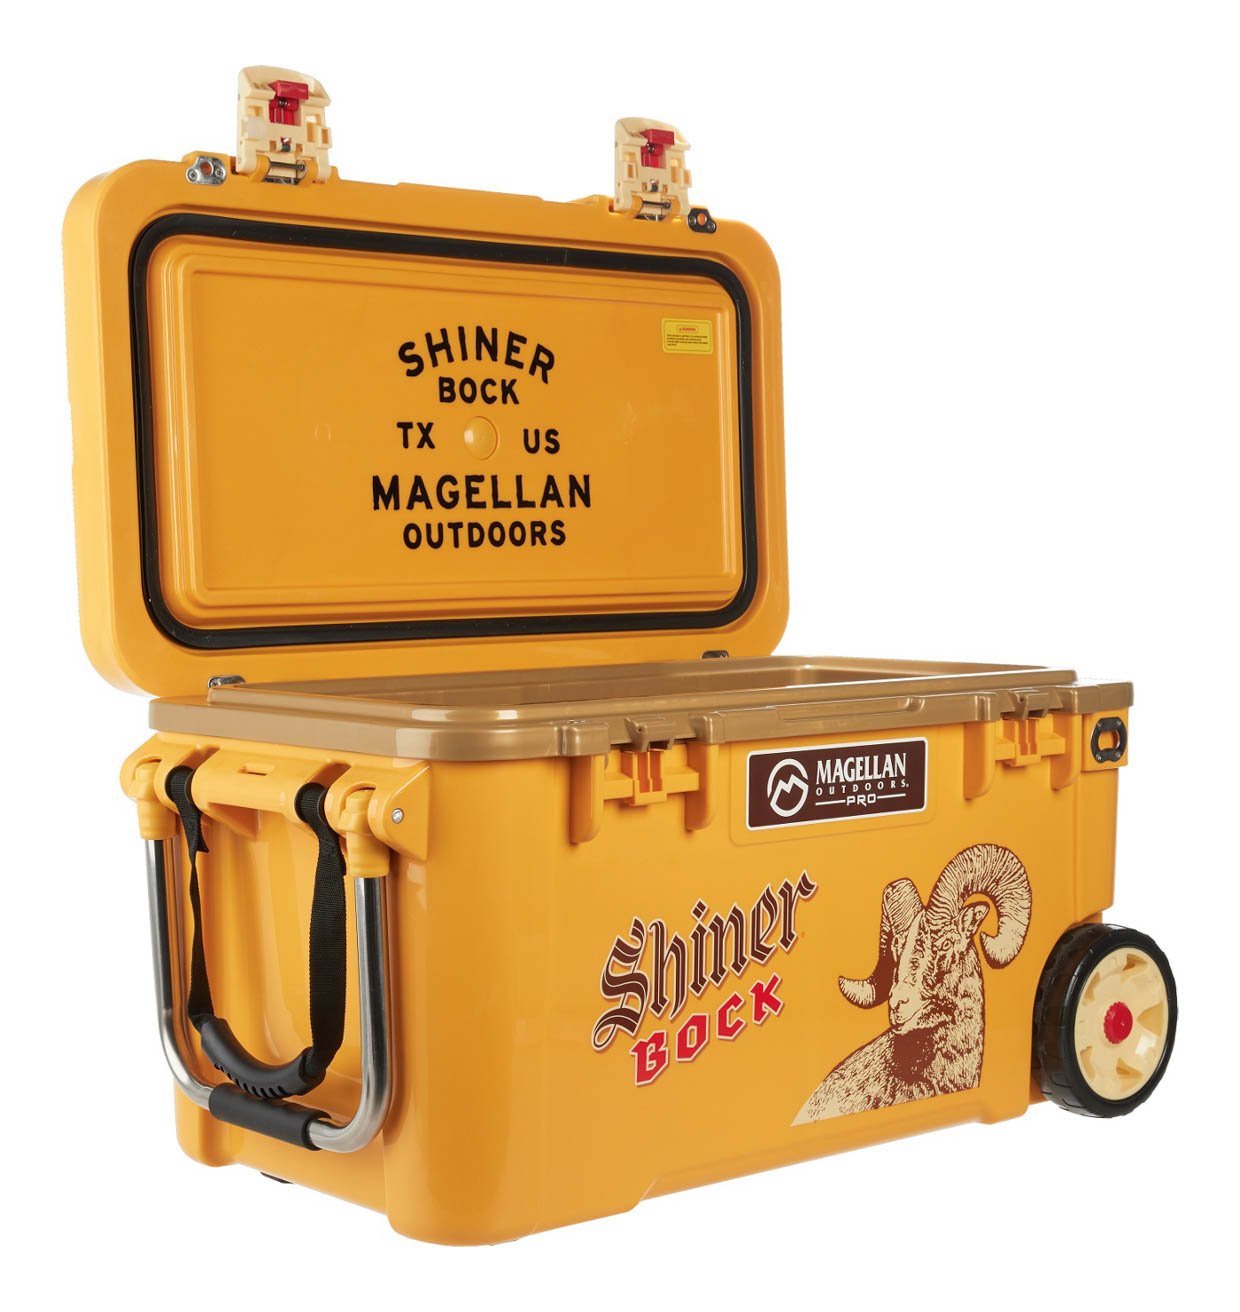 Shiner Beer x Magellan Outdoors Gear